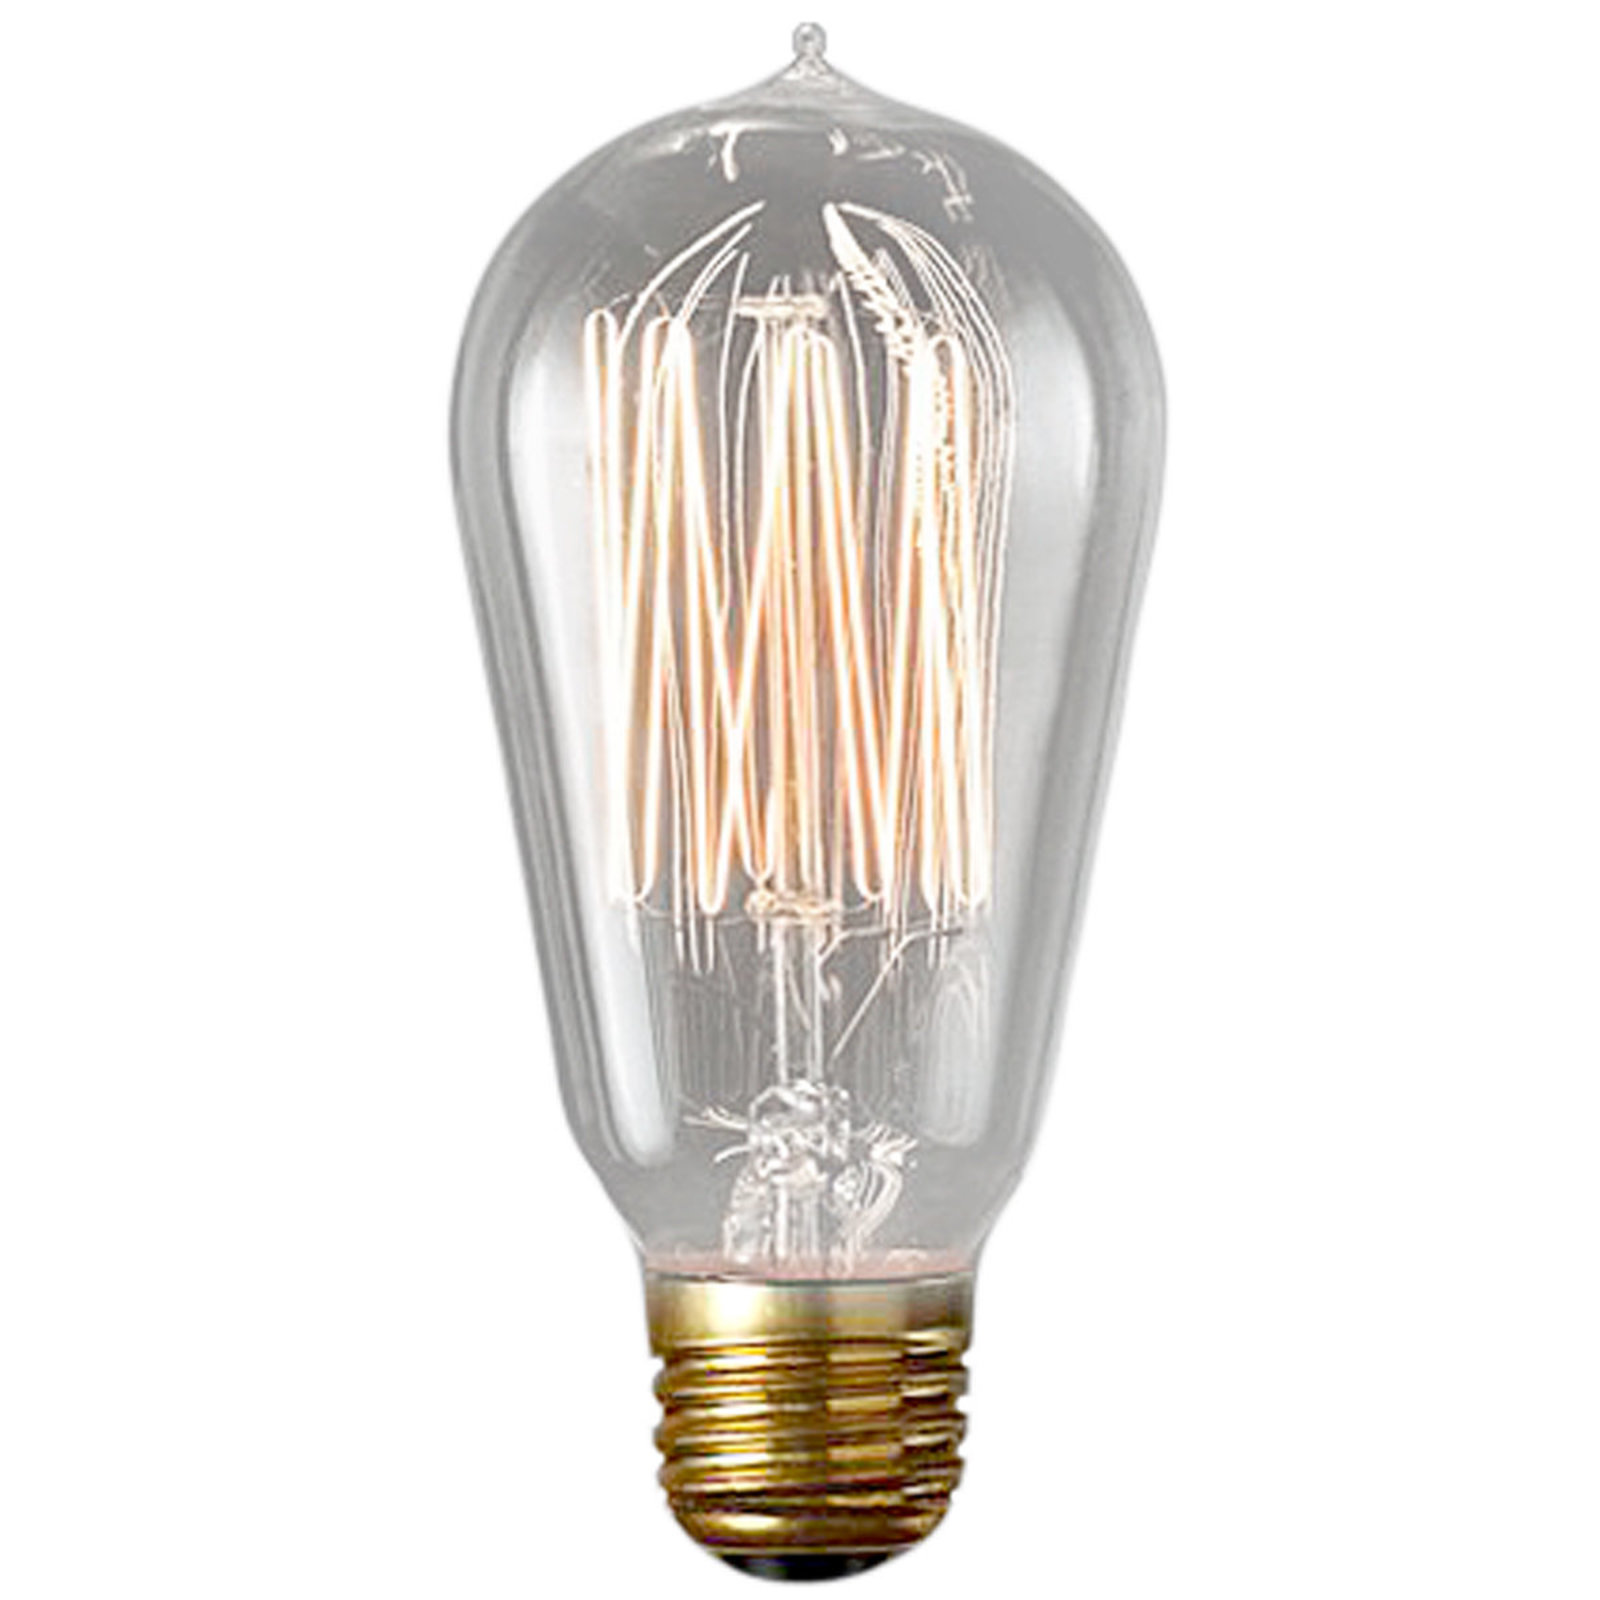 60 Watt Vintage Edison Light Bulb - Smoke - Shades of Light